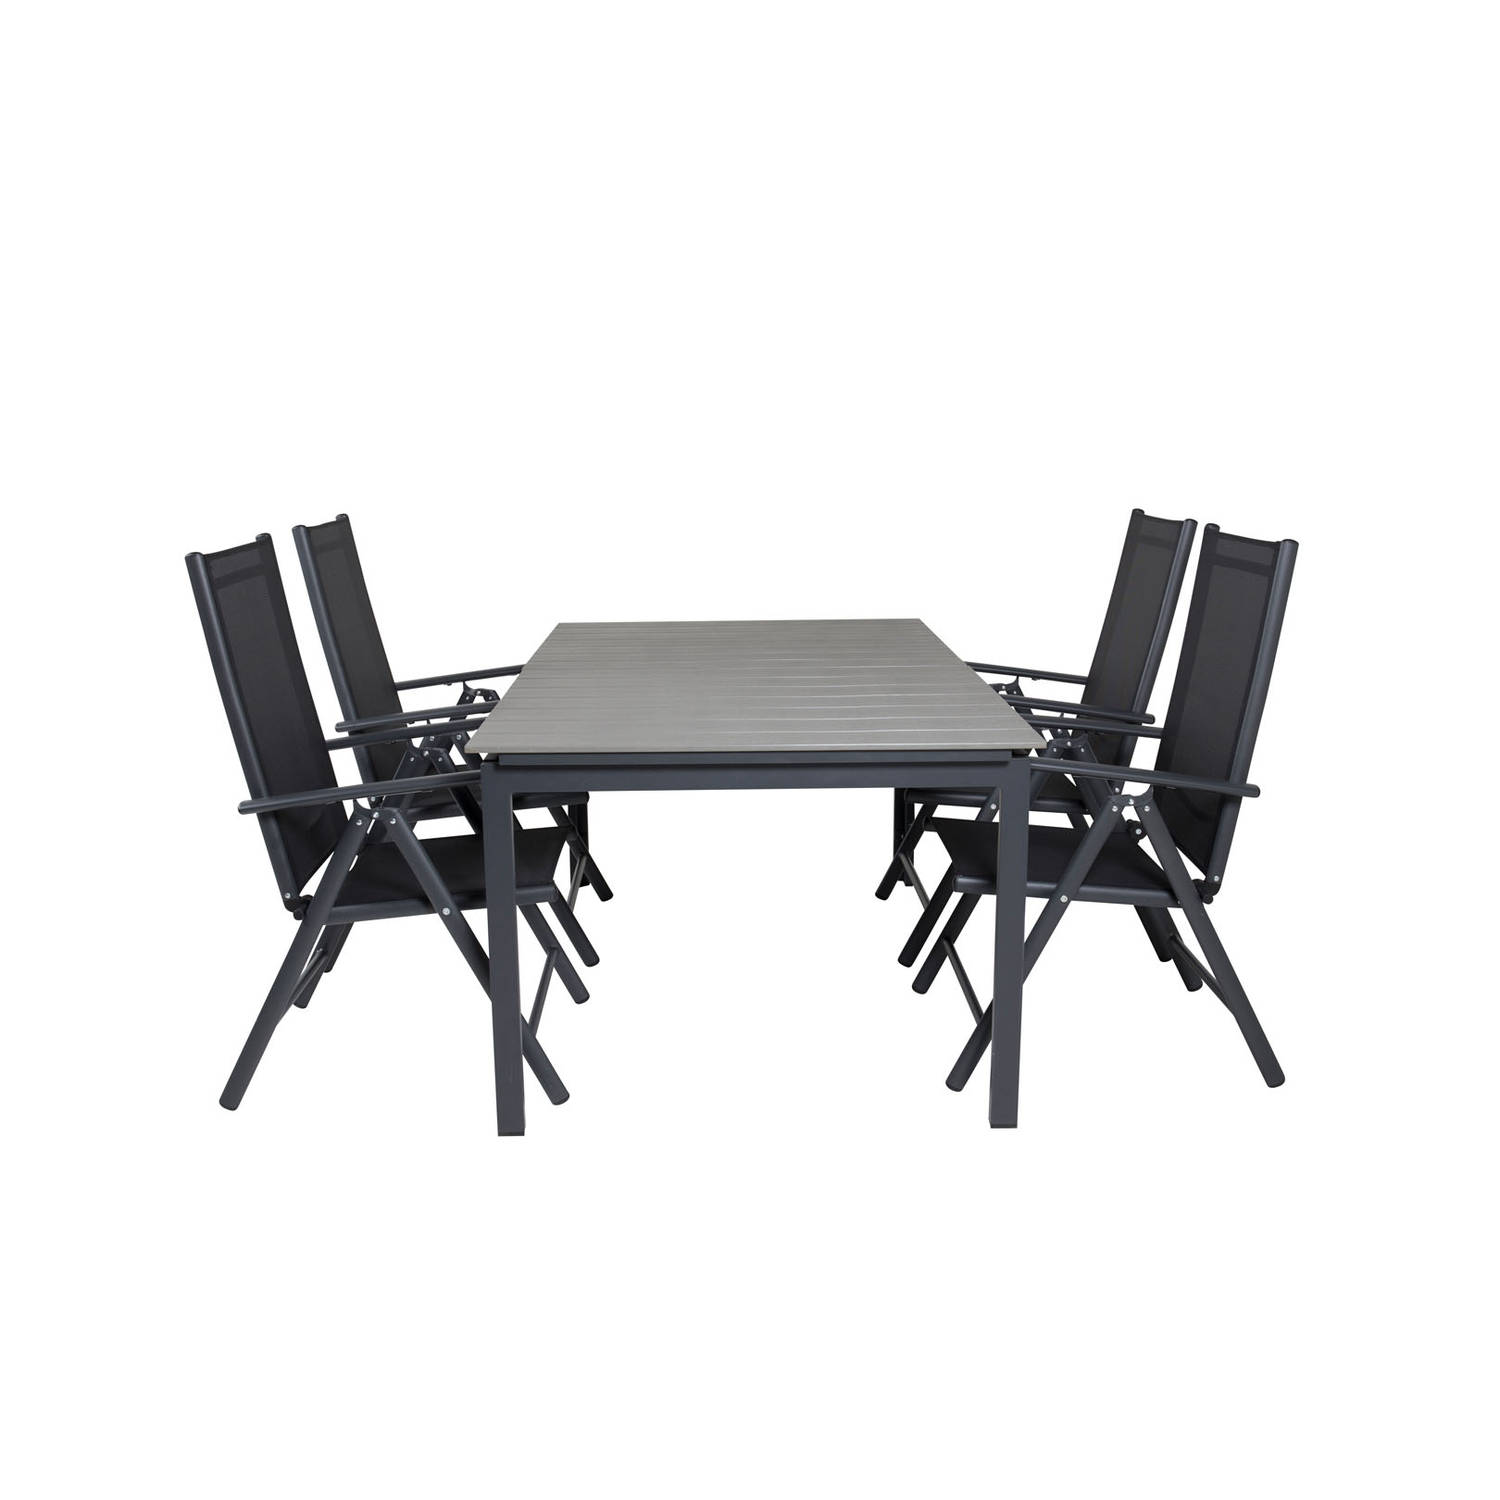 Blokker Tuinsets - Levels tuinmeubelset tafel 100x160/240cm en 4 stoel Break zwart, grijs. aanbieding